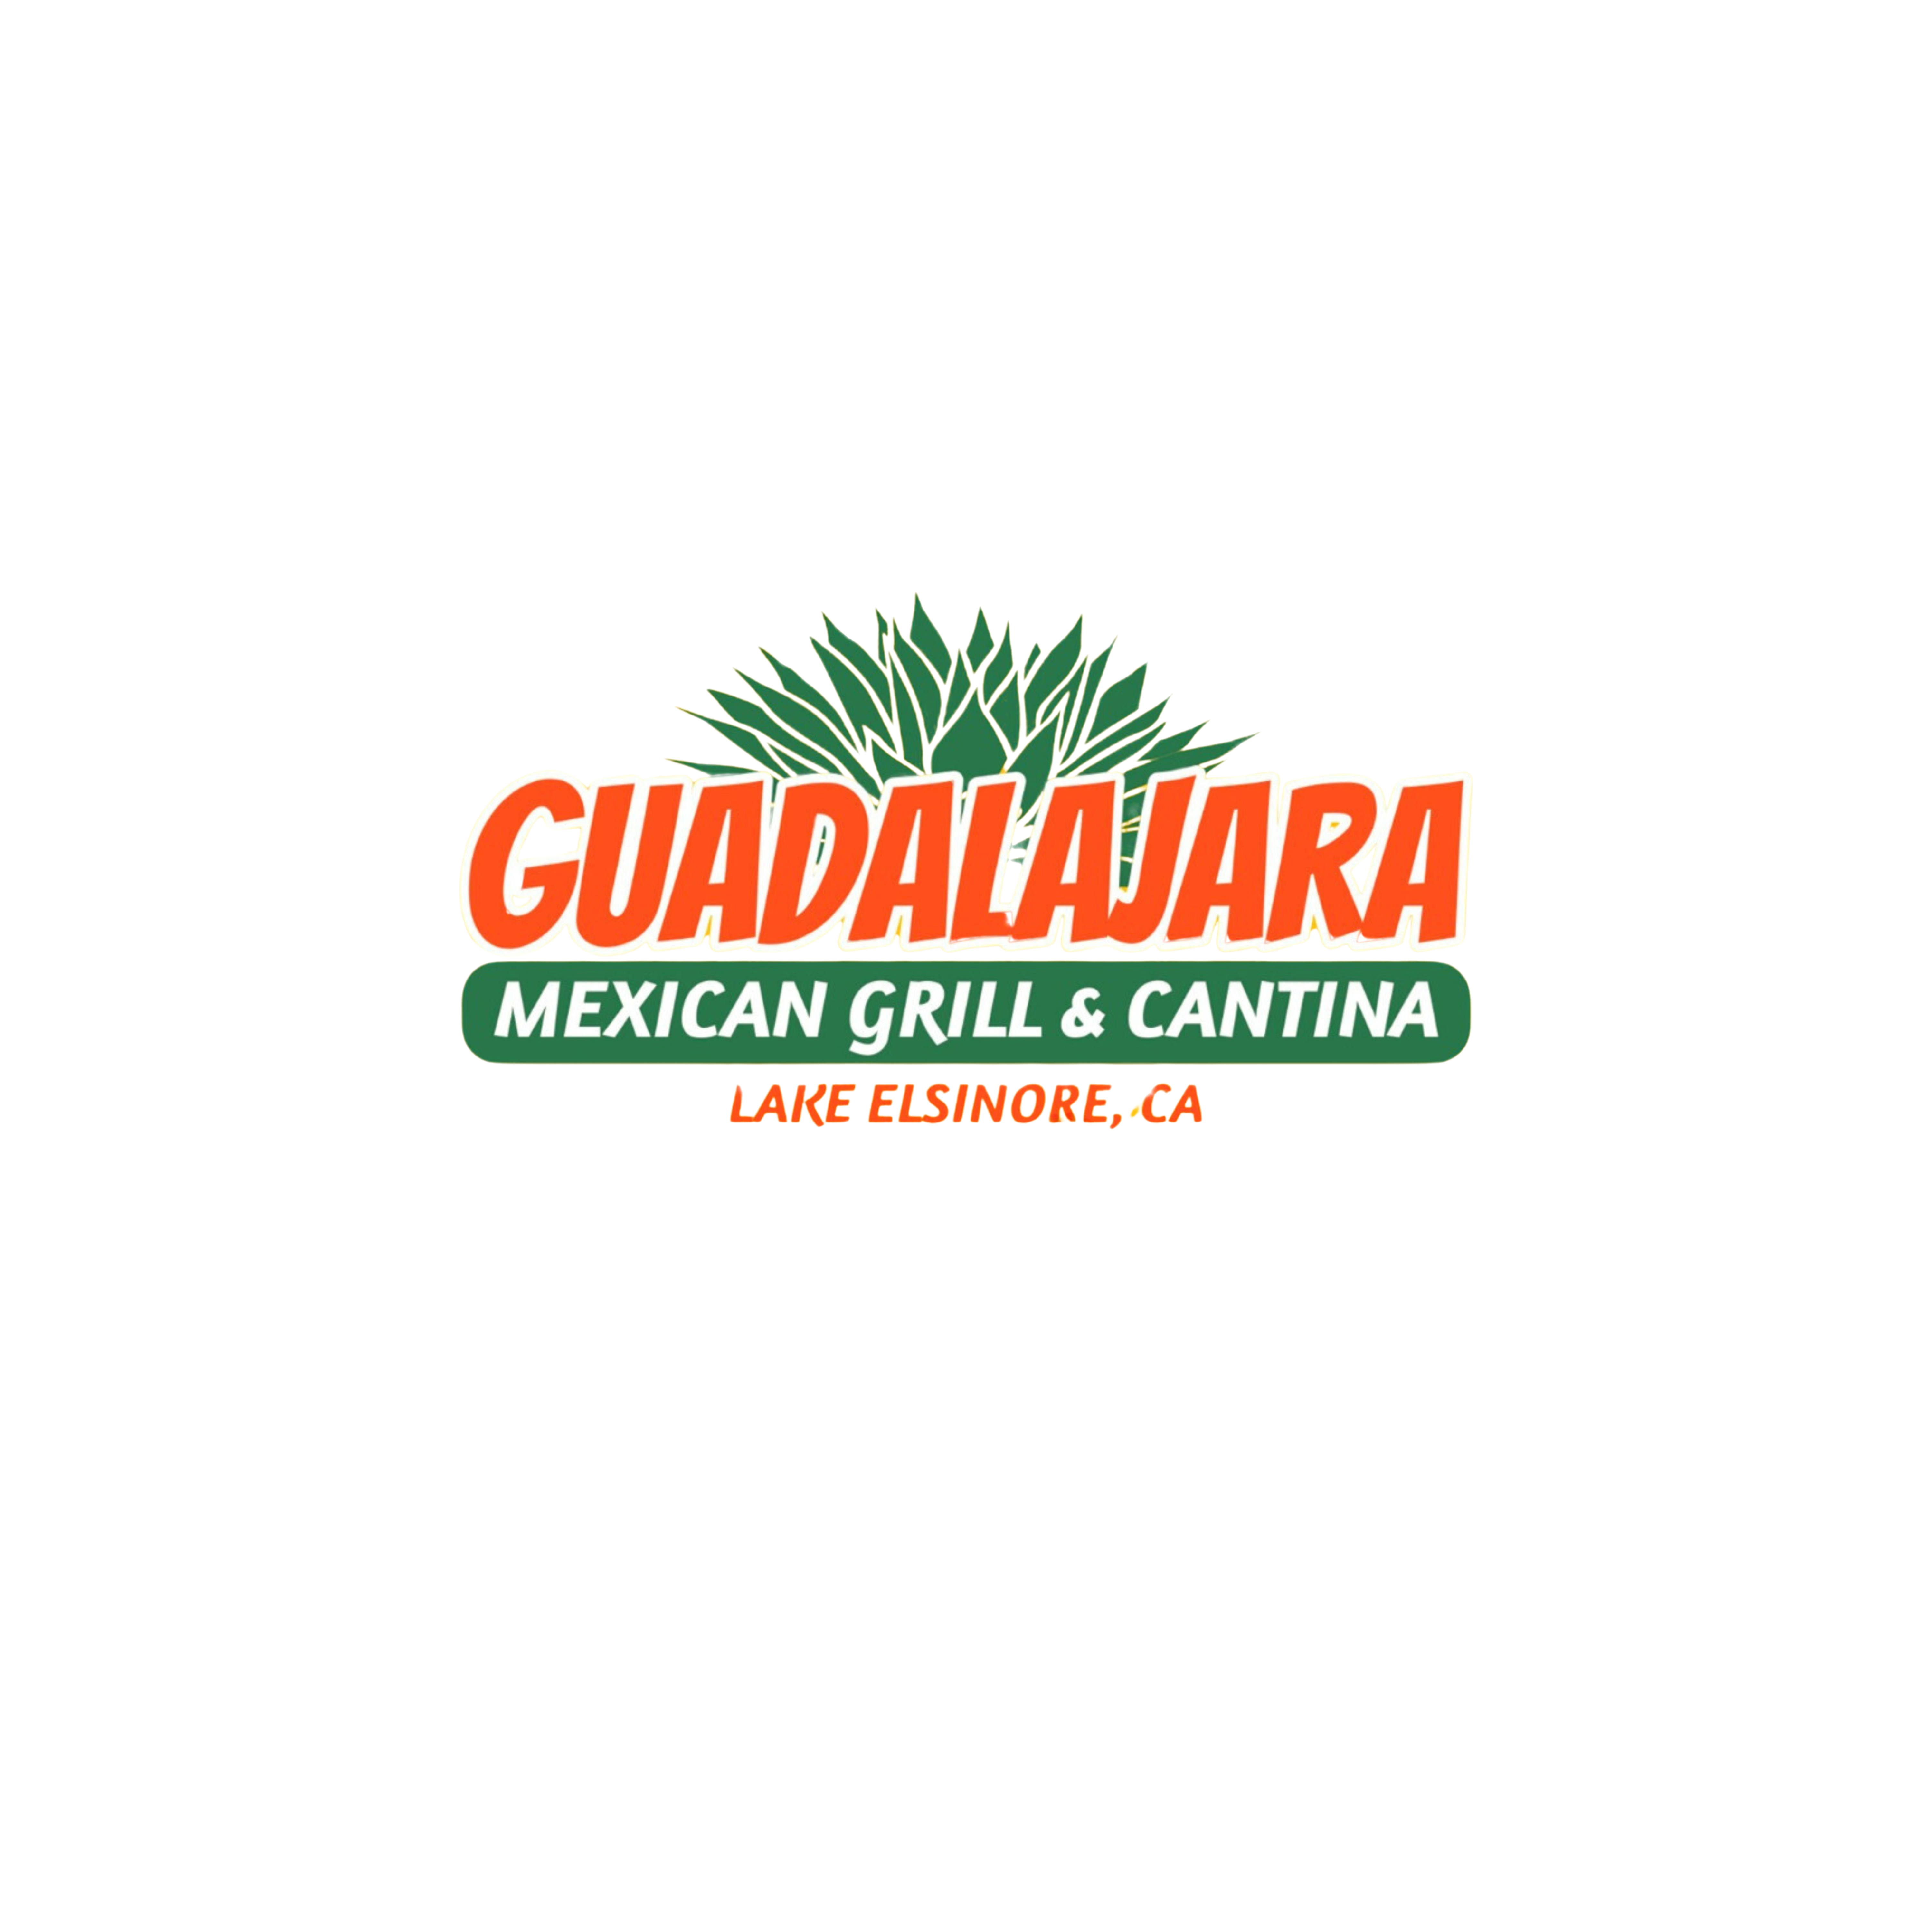 Guadalajara Mexican Grill & Cantina Lake Elsinore (951)674-8294